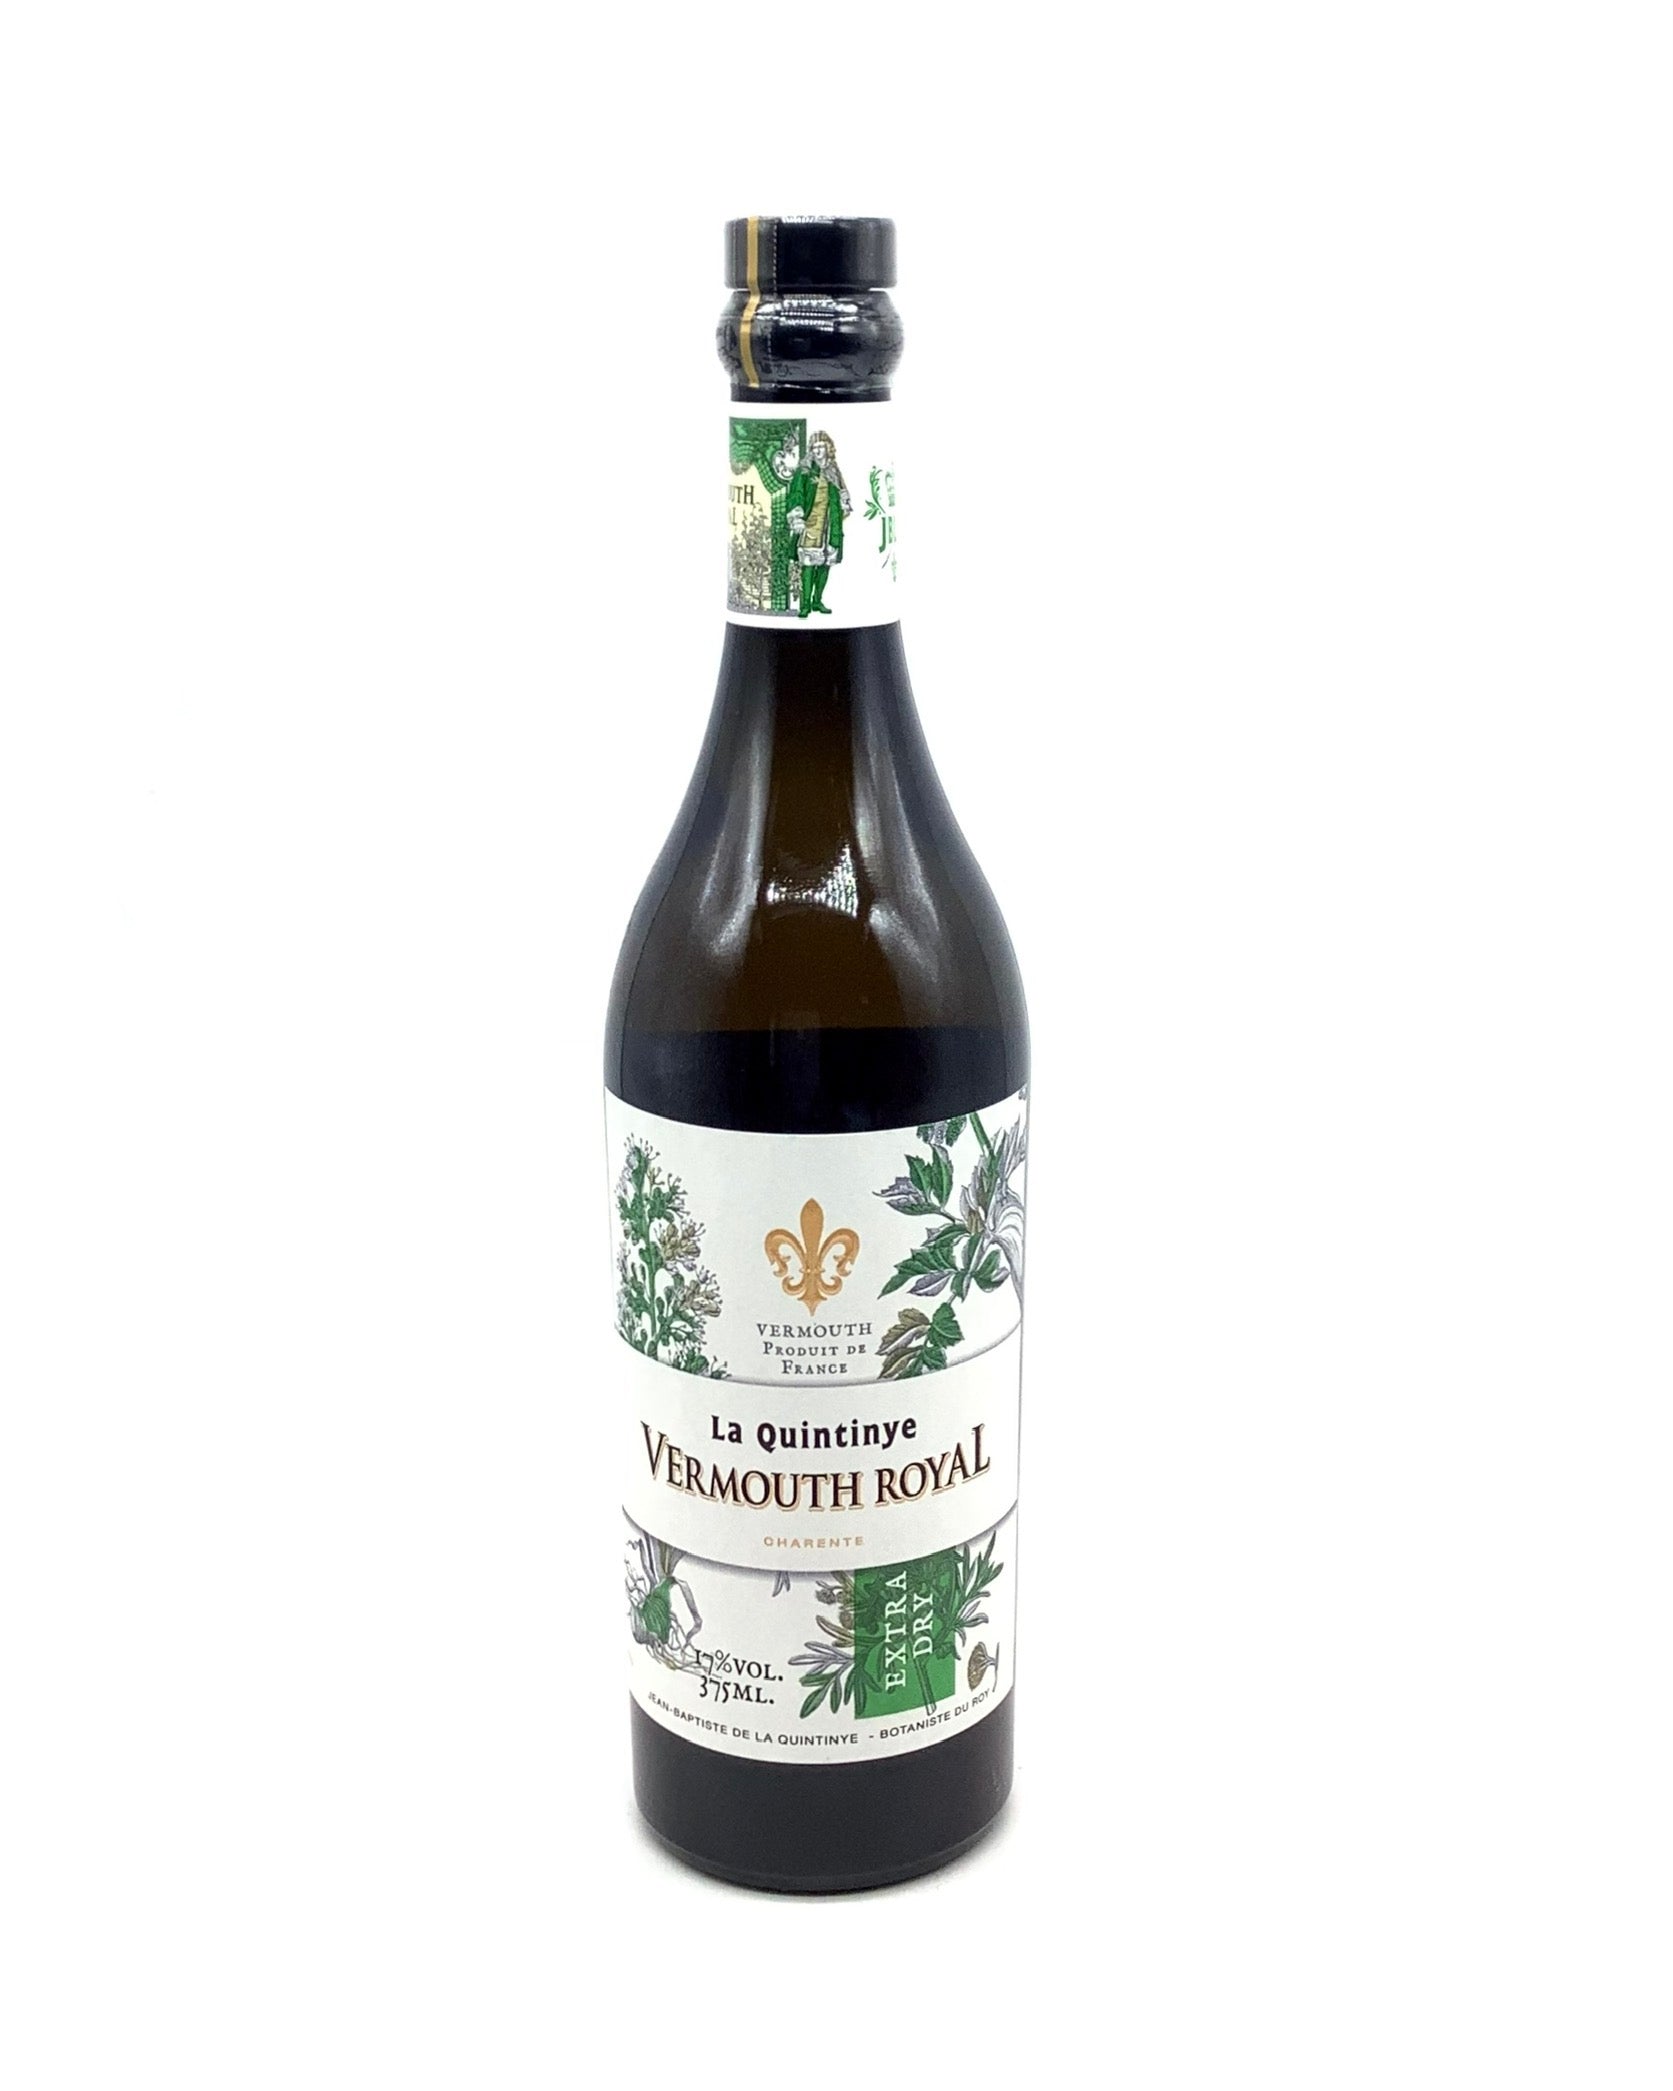 La Quintinye Vermouth Royal Extra Dry Pineau des Charentes 375ml